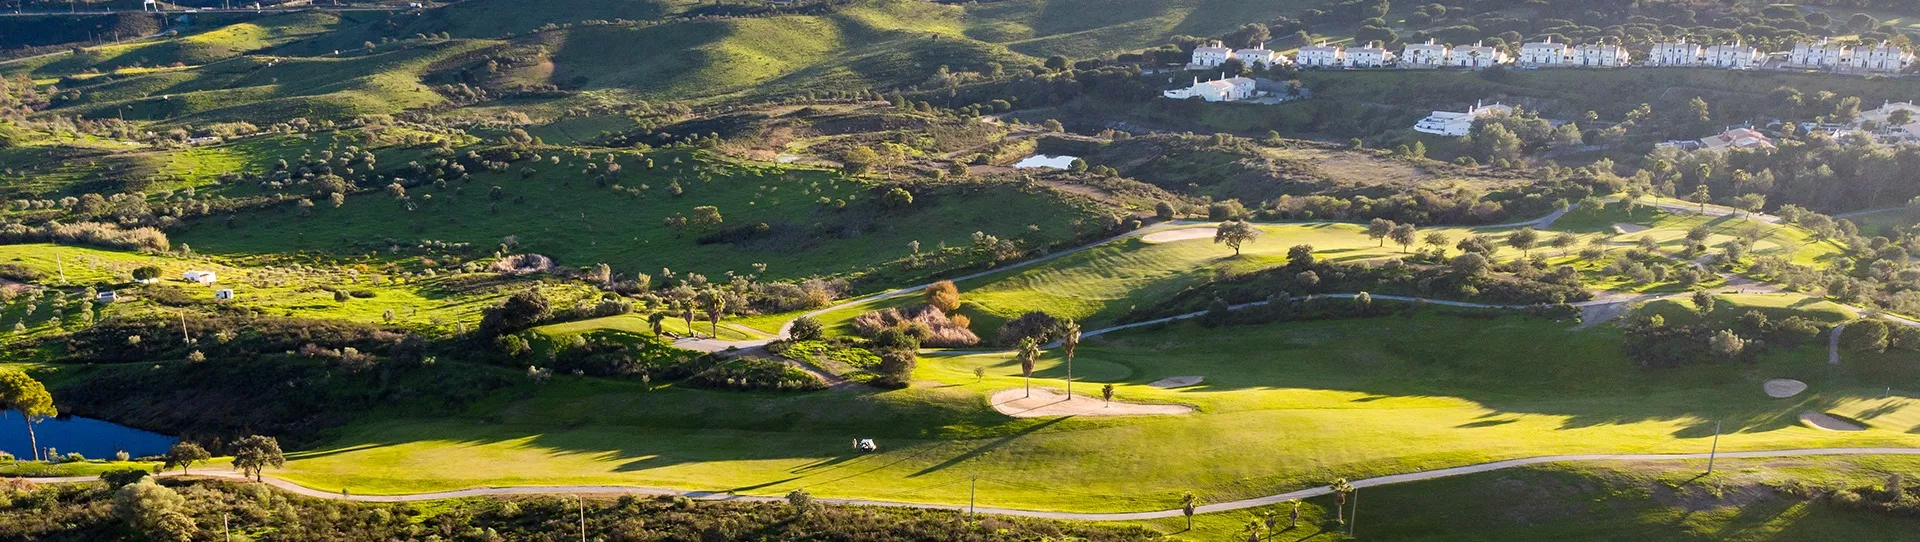 Portugal Golf Driving Range - Castro Marim Golfe & Country Club Driving Ranges - Photo 1